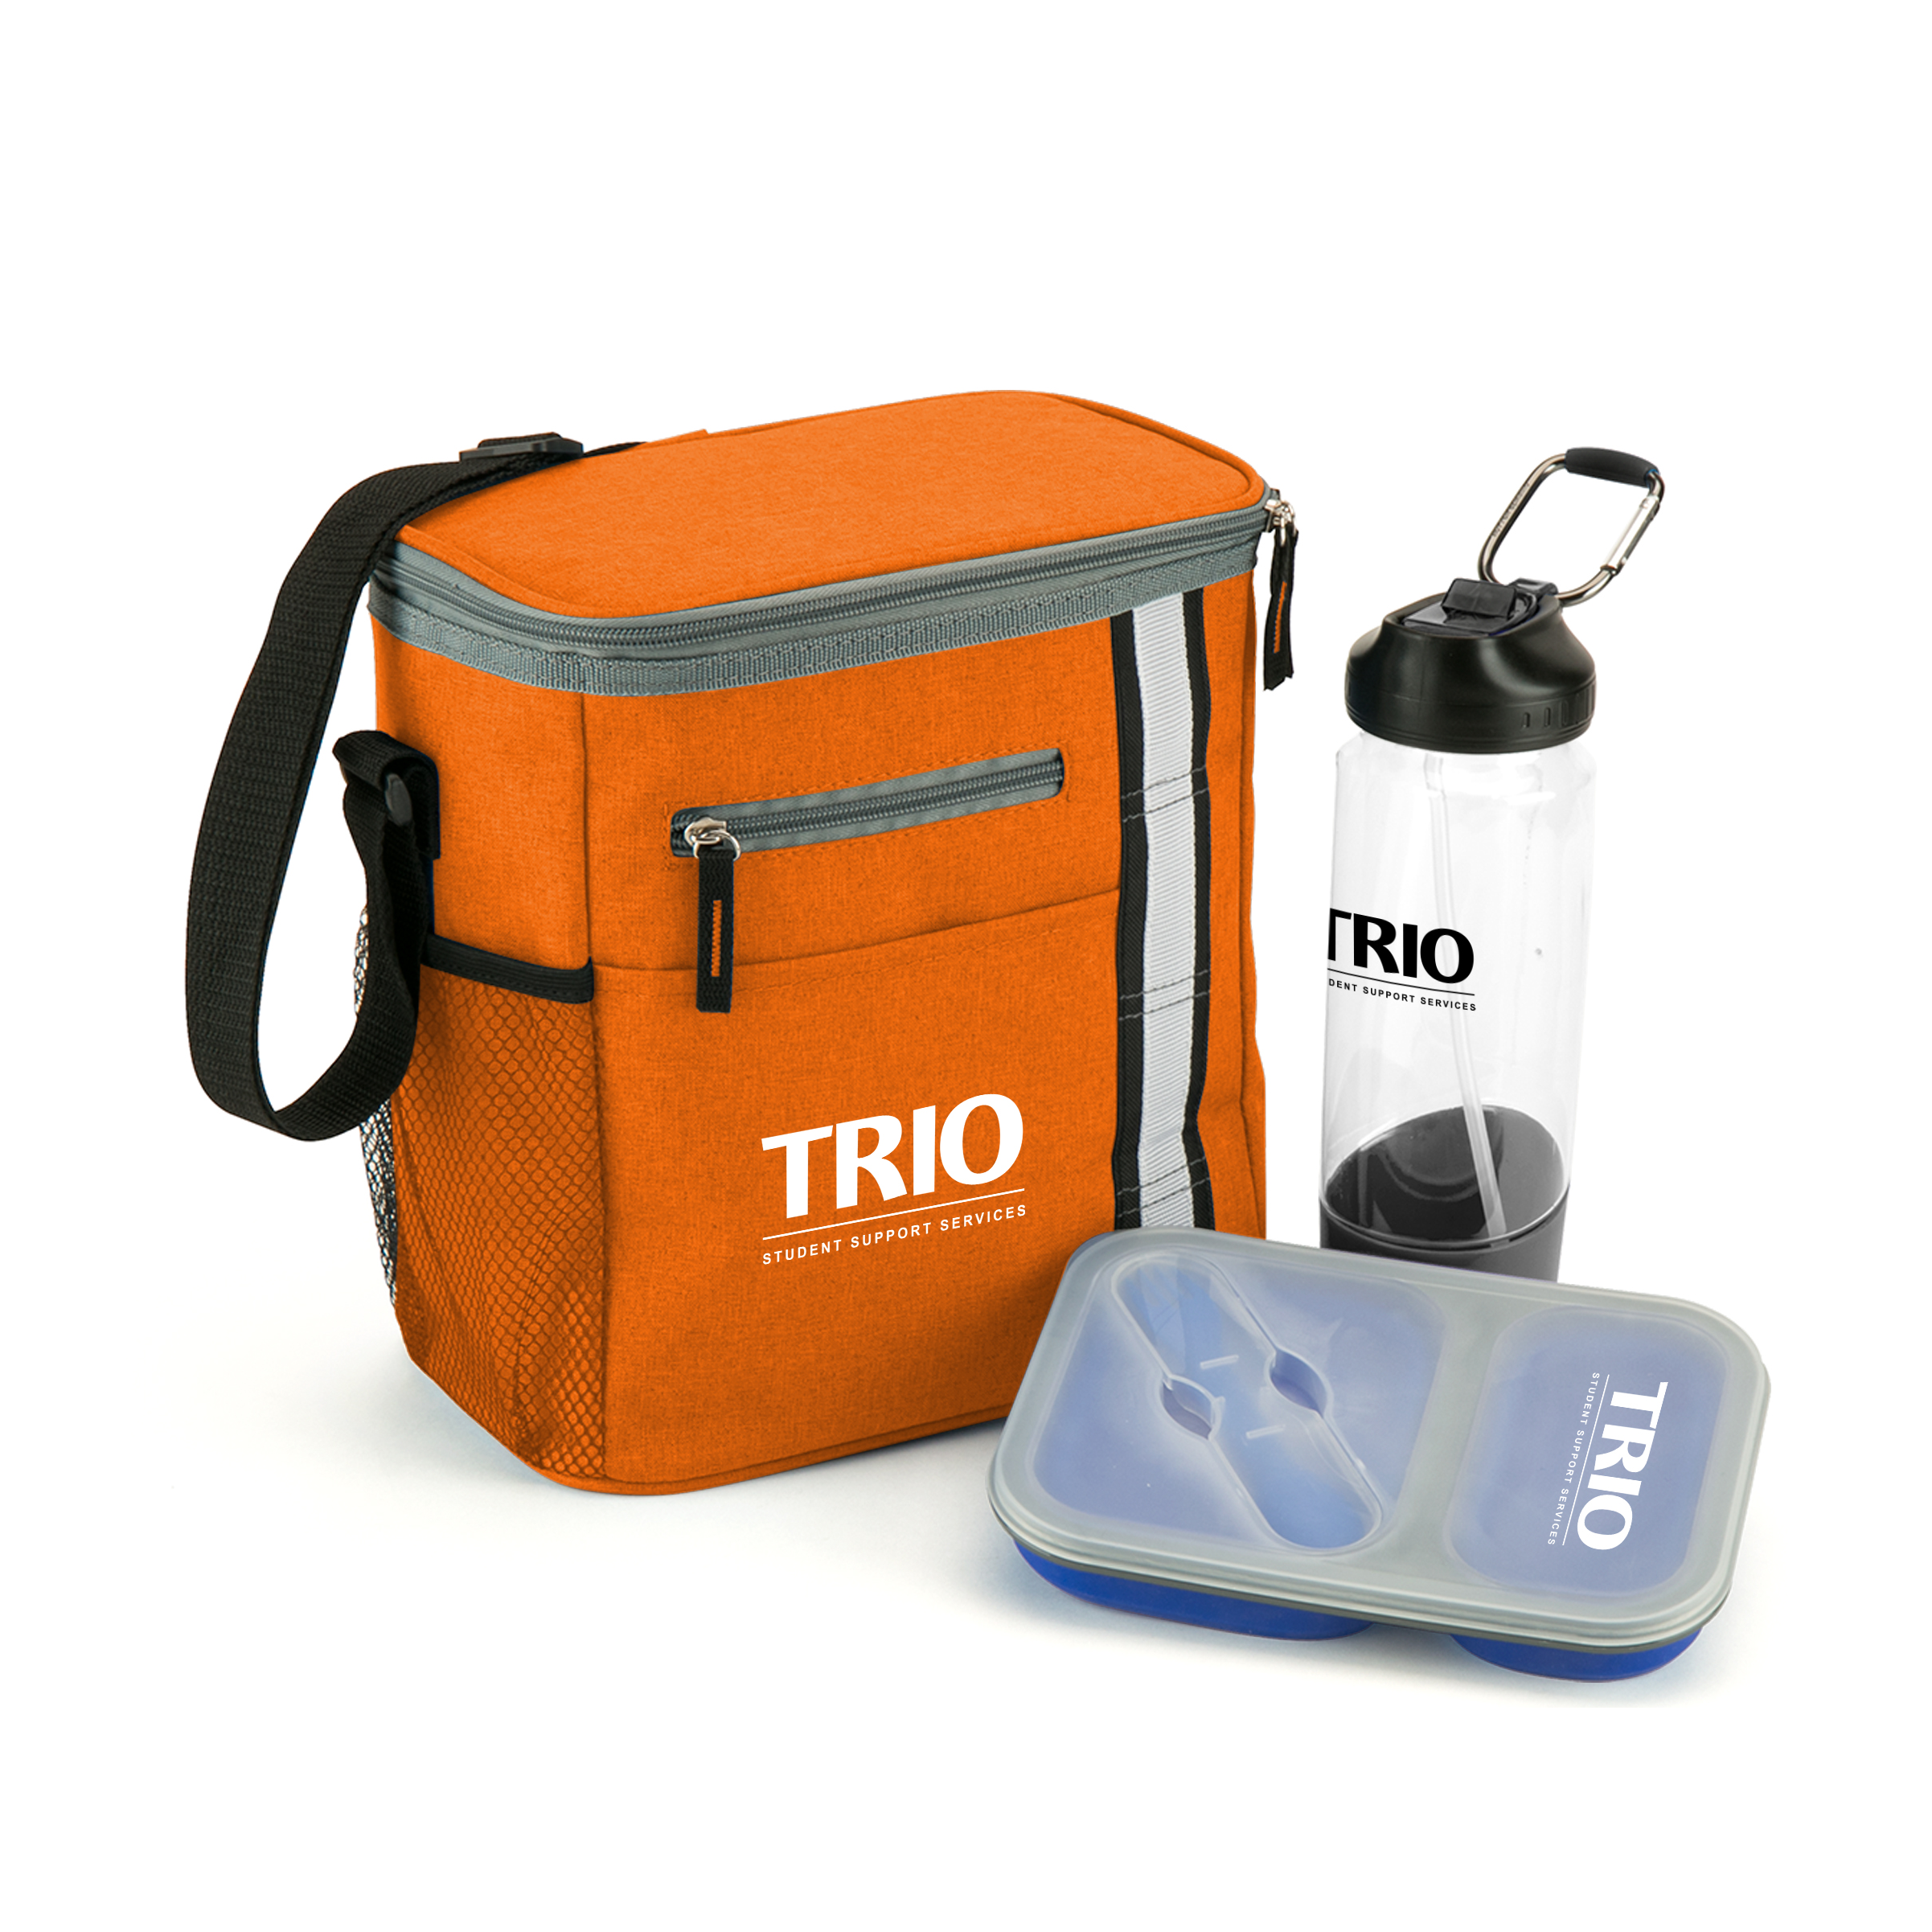 TRIO Kits